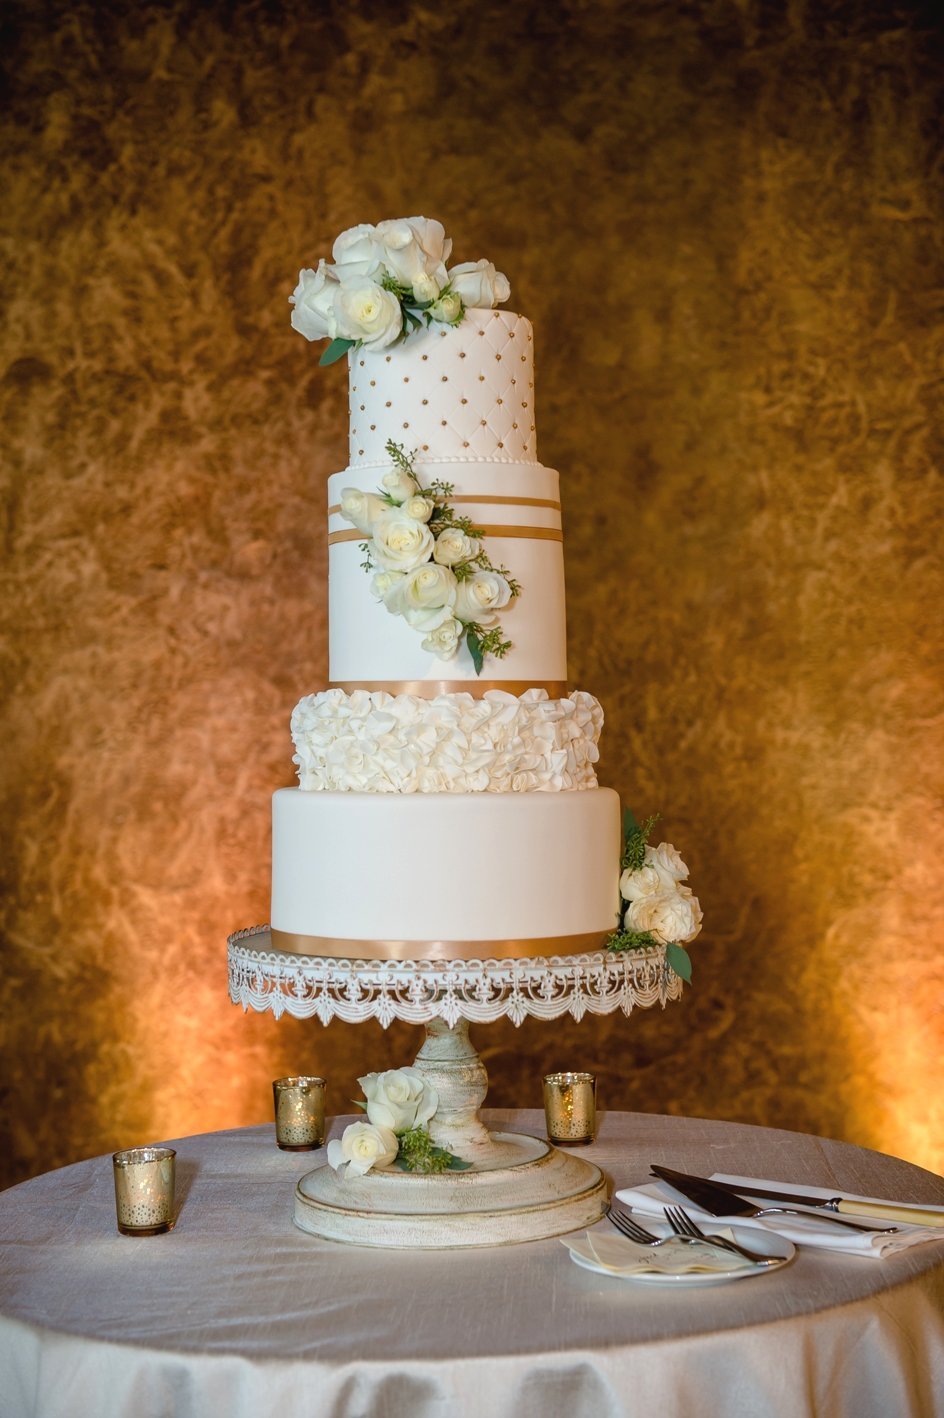 Christina_Greg Wedding Cake photo credit by OrangeGirl Photography2